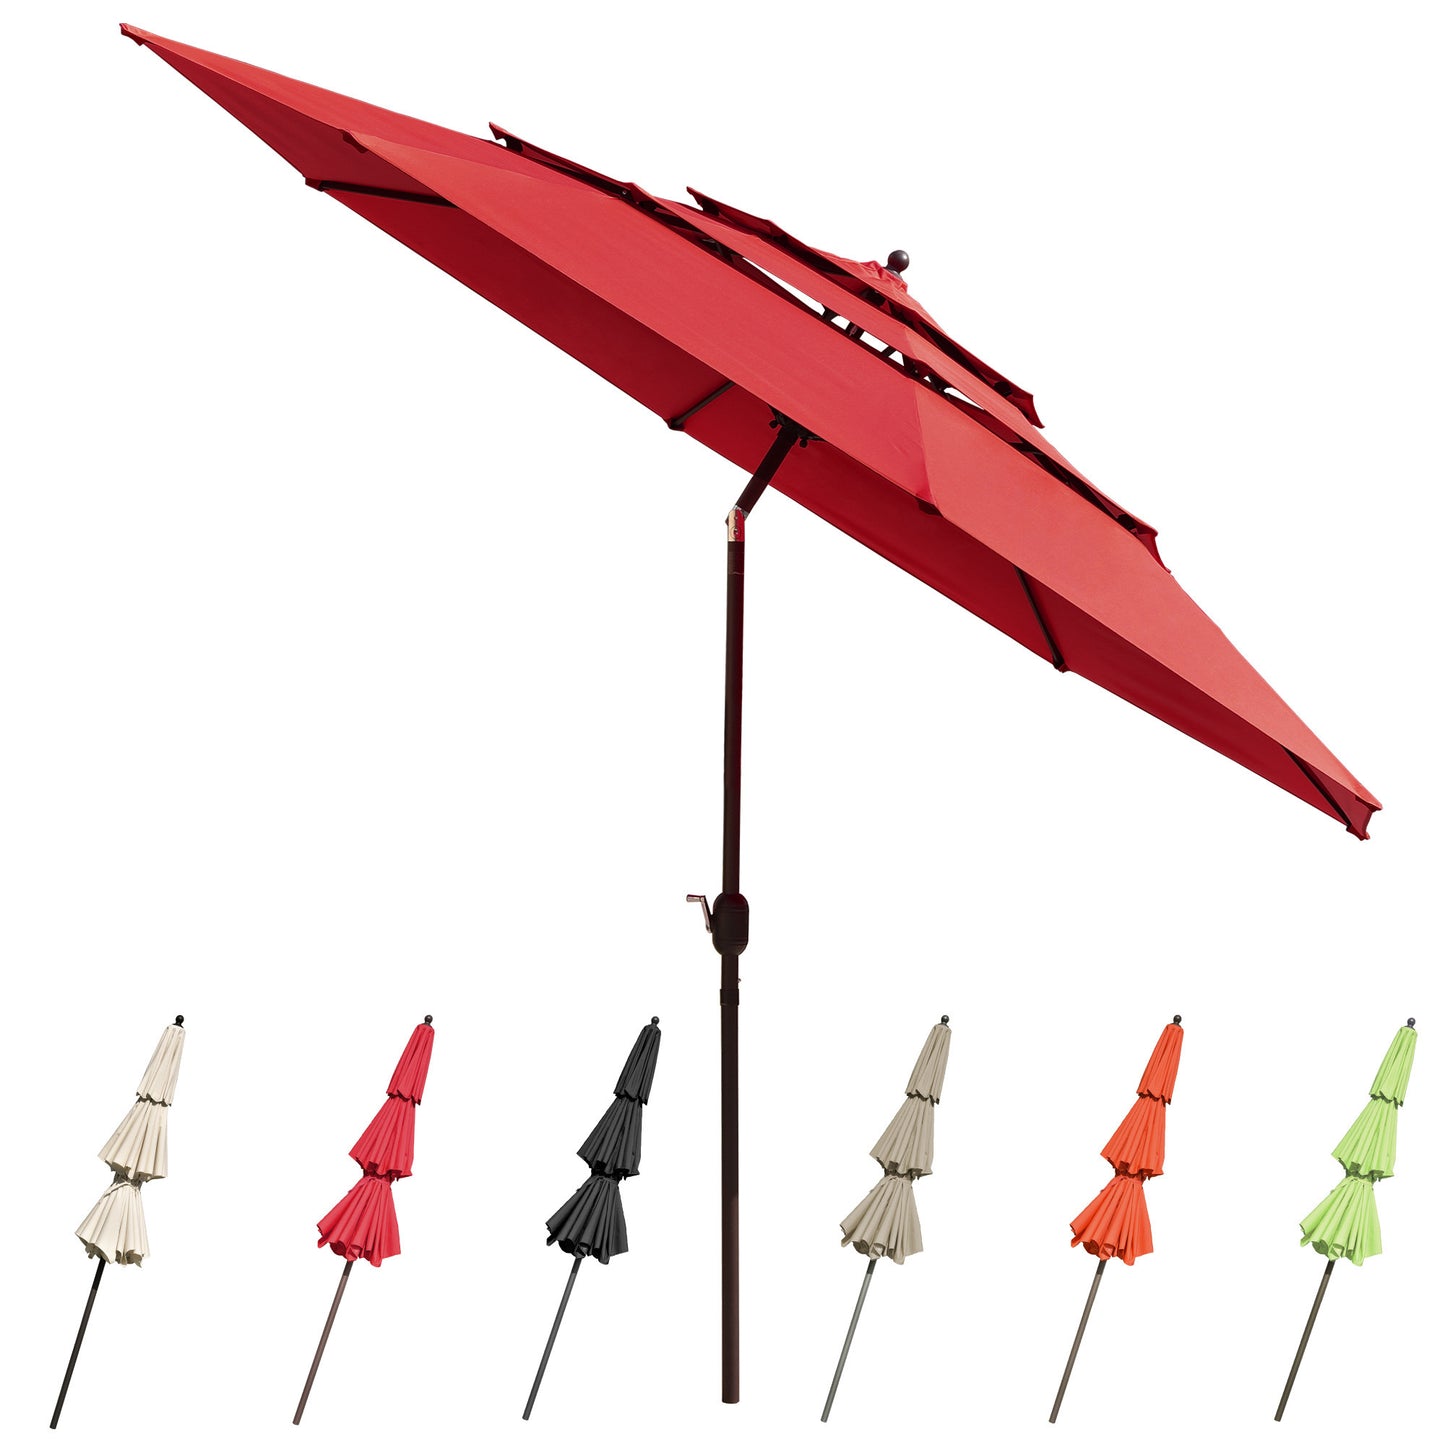 11Ft 3-Tiers Patio Umbrella Red